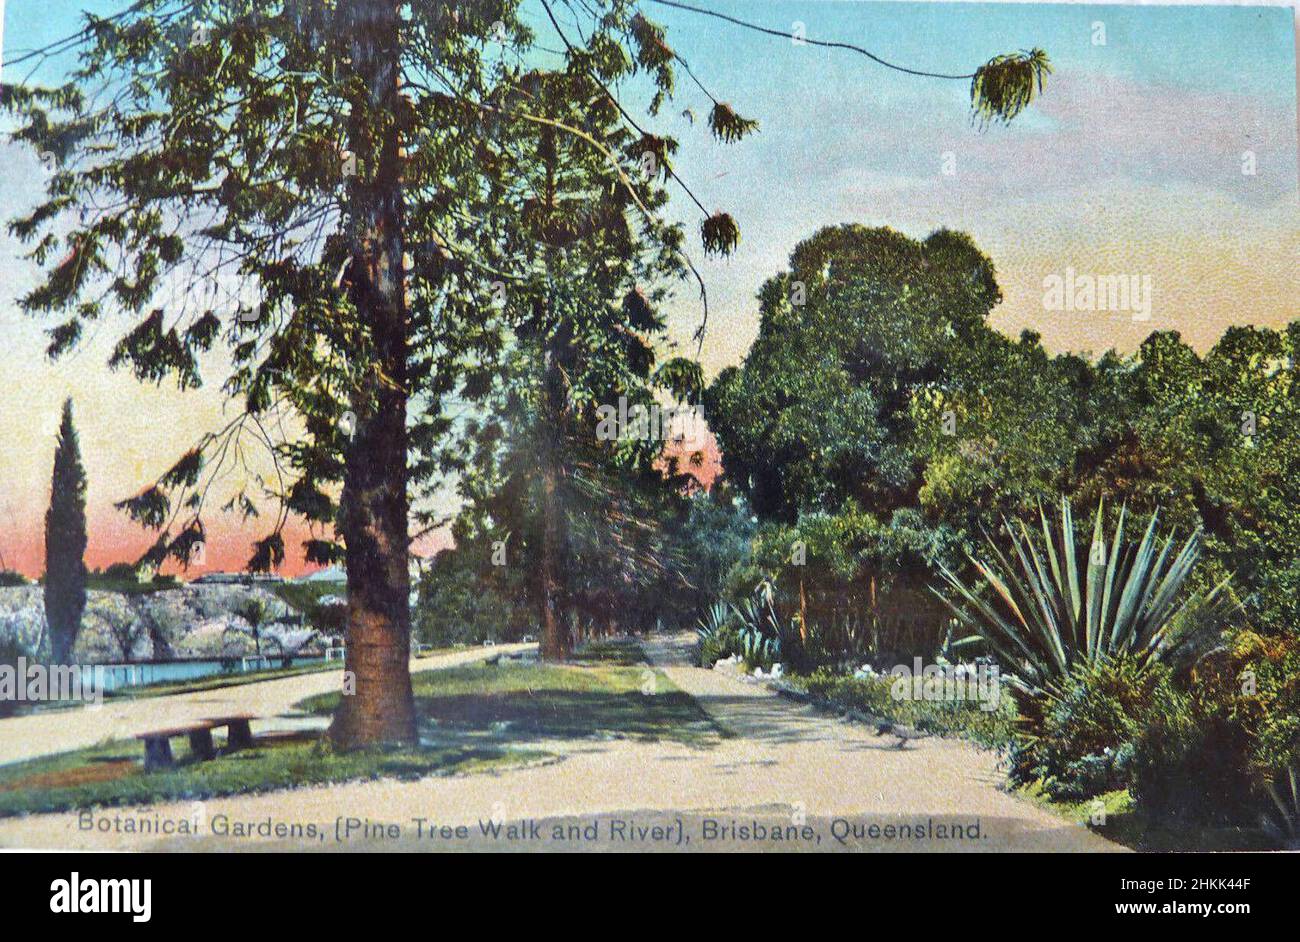 Botanic Gardens (Pine Tree Walk and River) Brisbane, Australia - circa 1910 Stock Photo